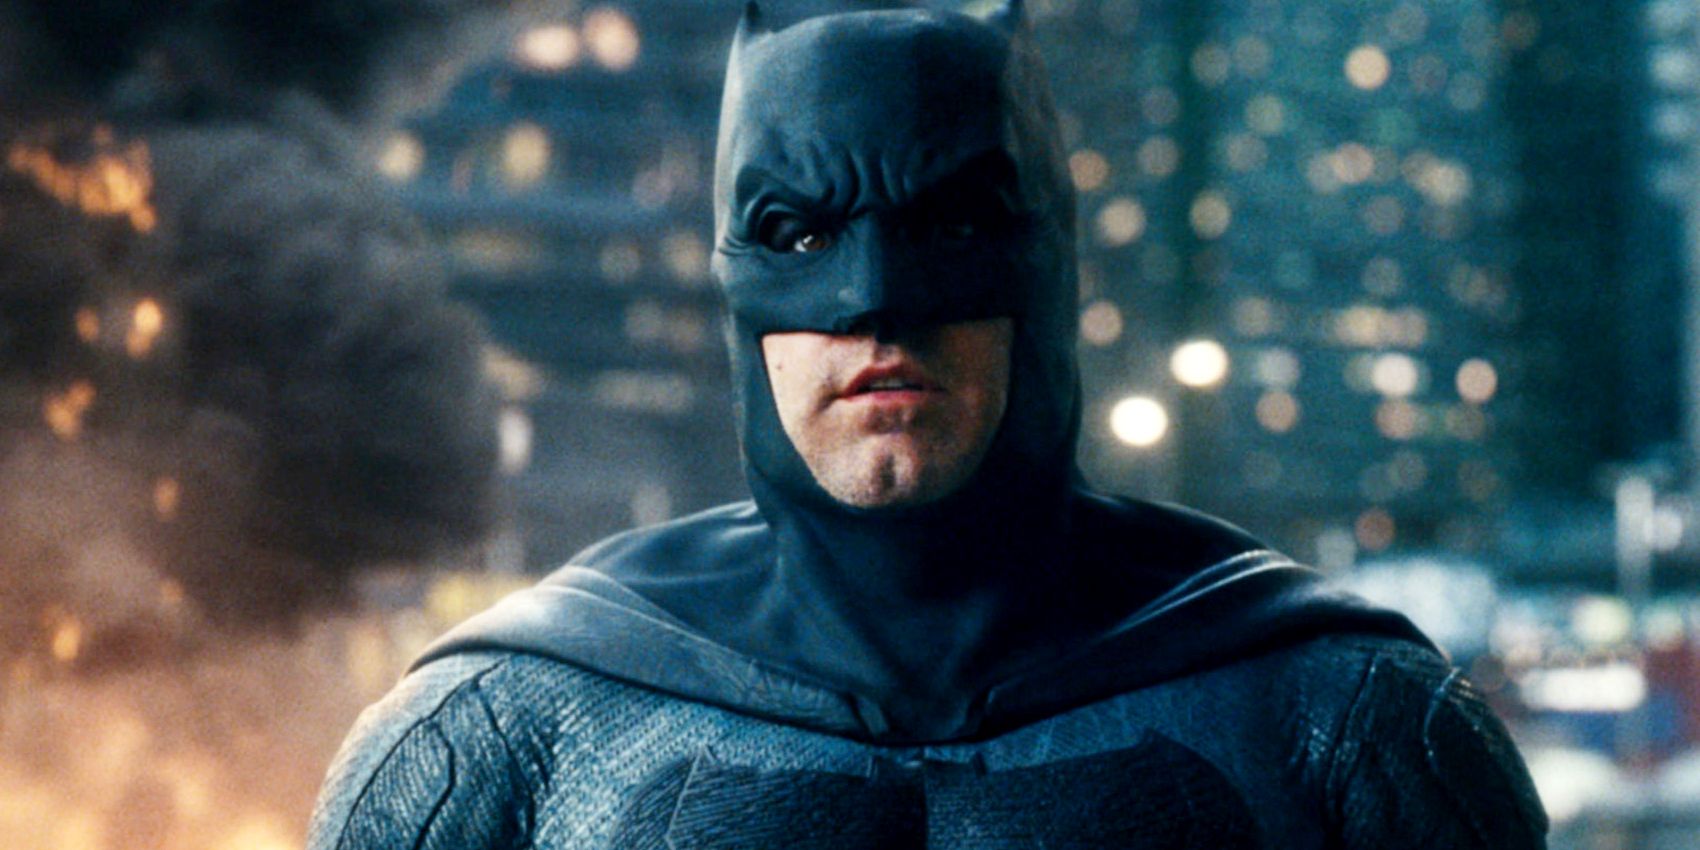 Ben Affleck aka Batfleck as Batman in the DCU